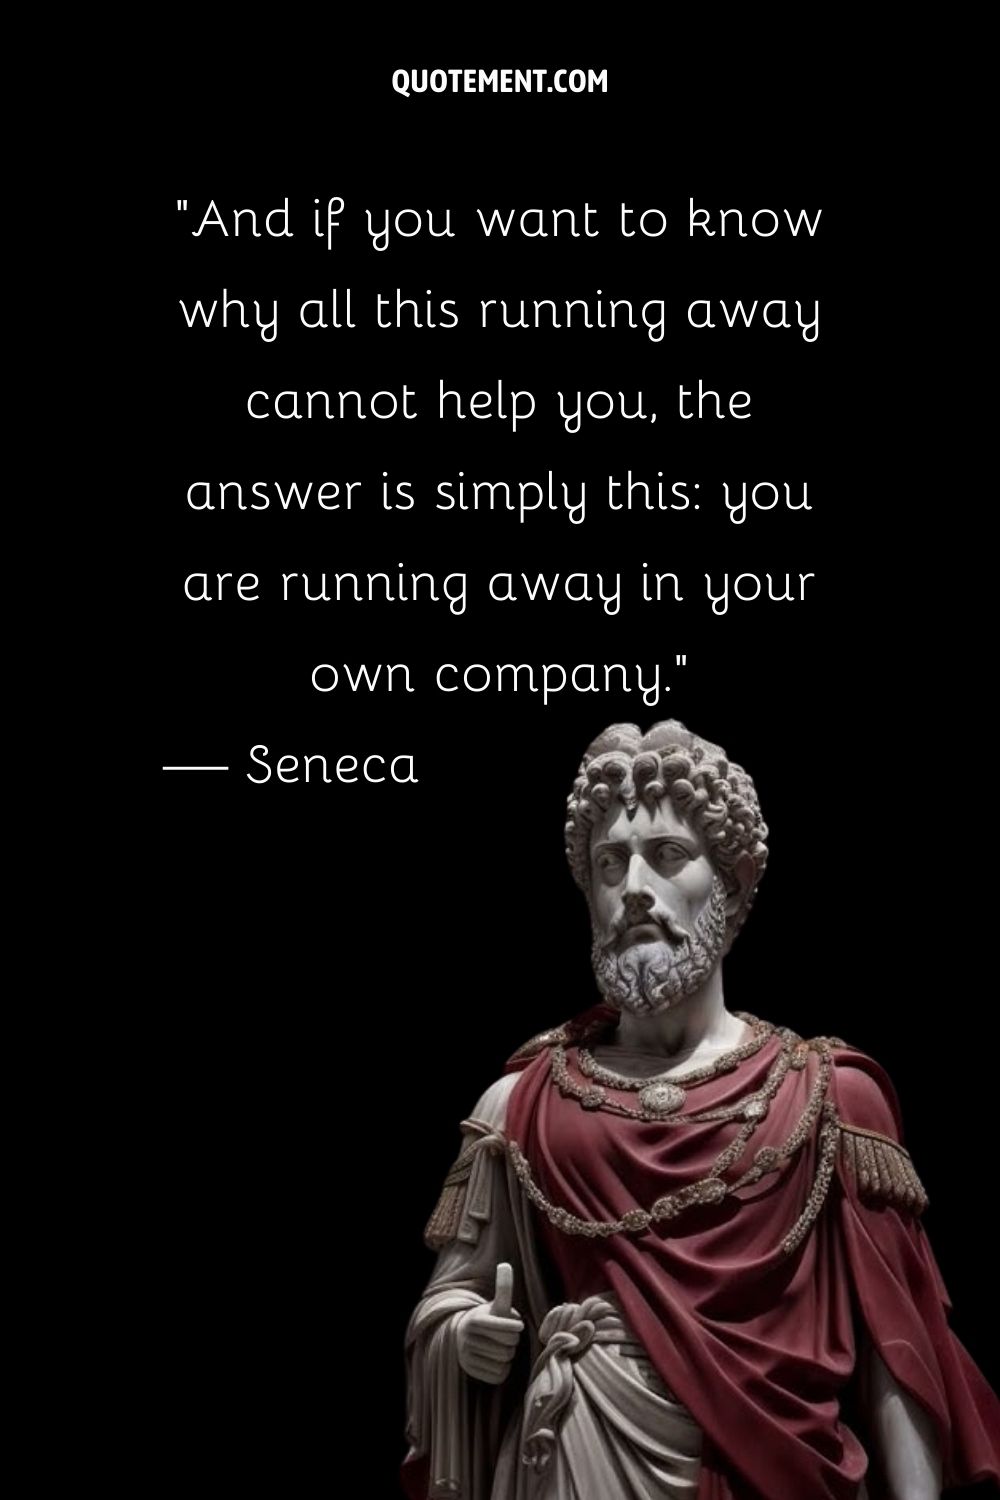 Seneca's enduring wisdom carved in marble.